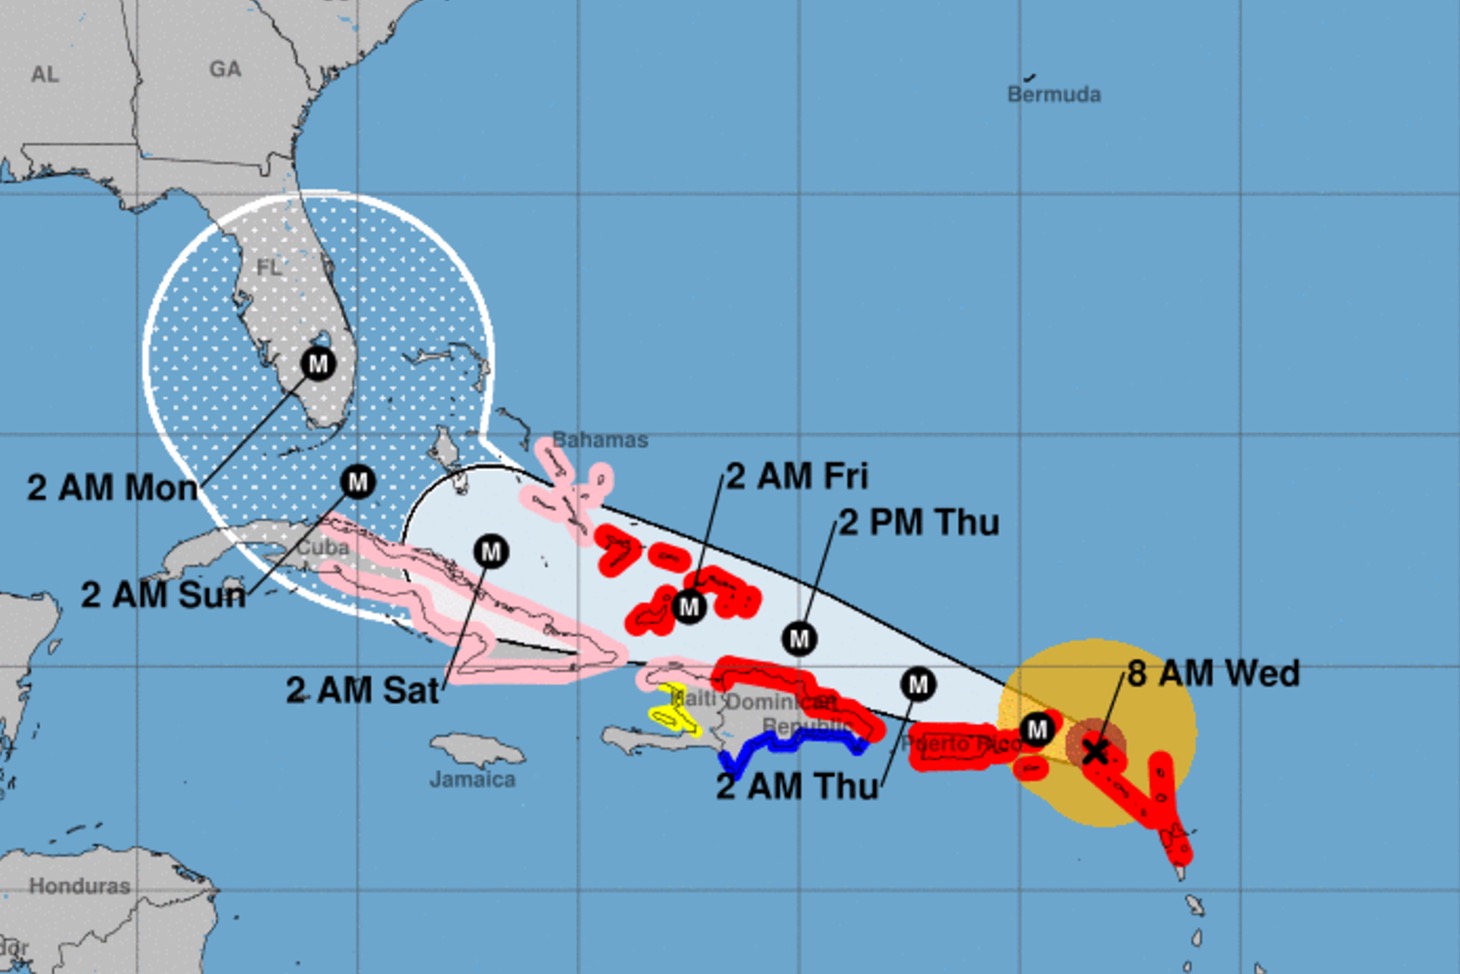 Trayectoria del huracán Irma. Imagen: NOOA